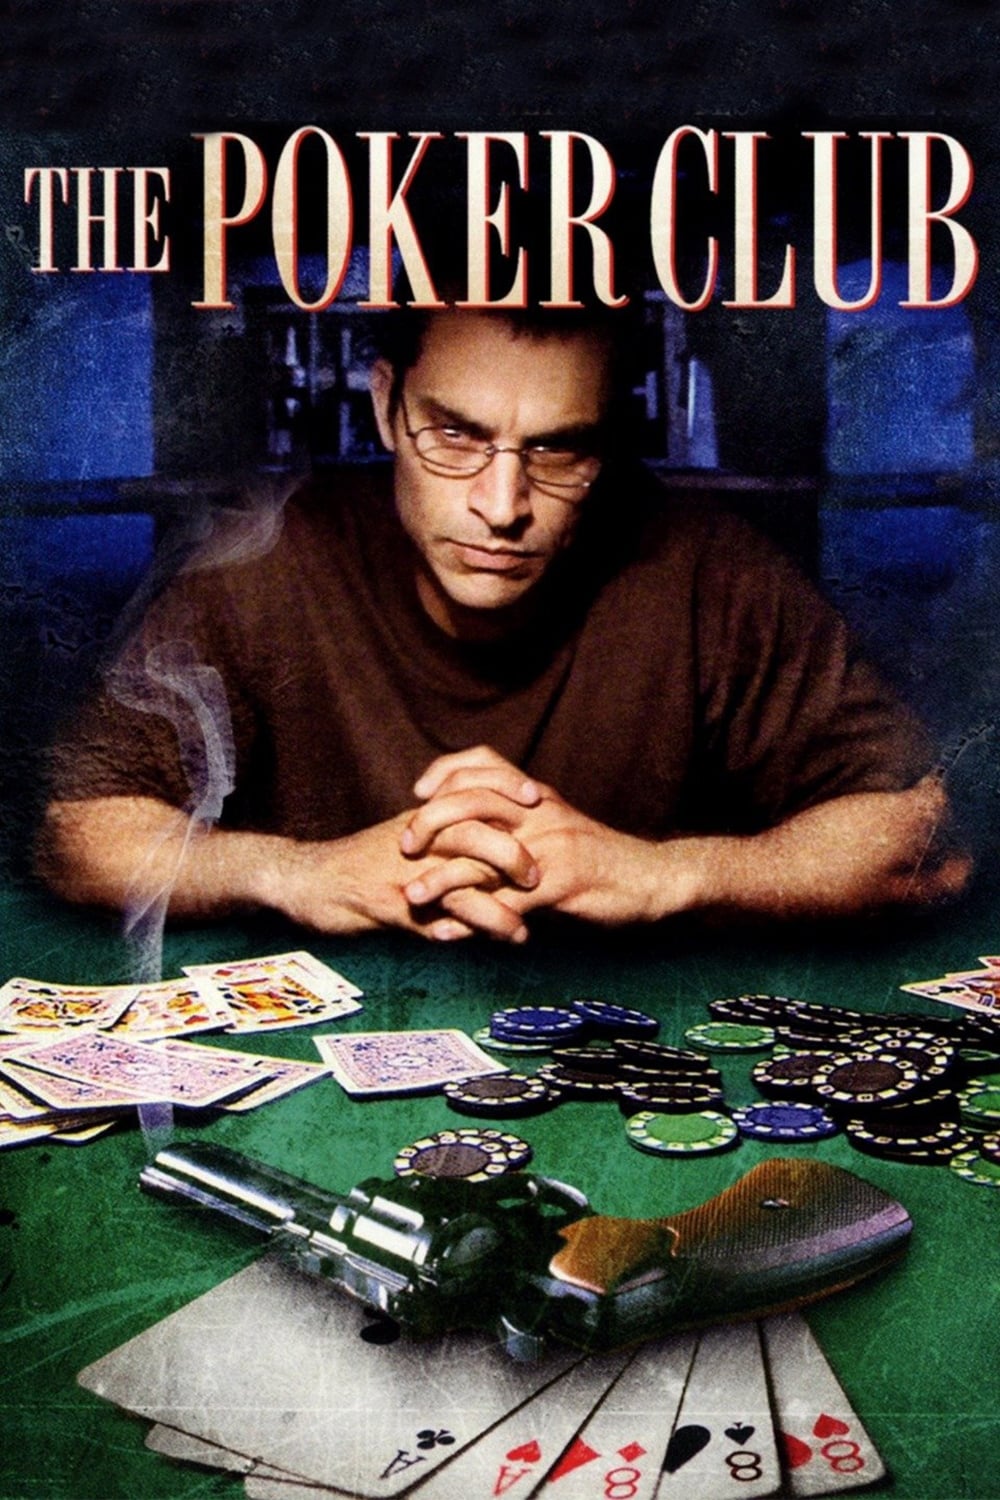 The Poker Club (2008)